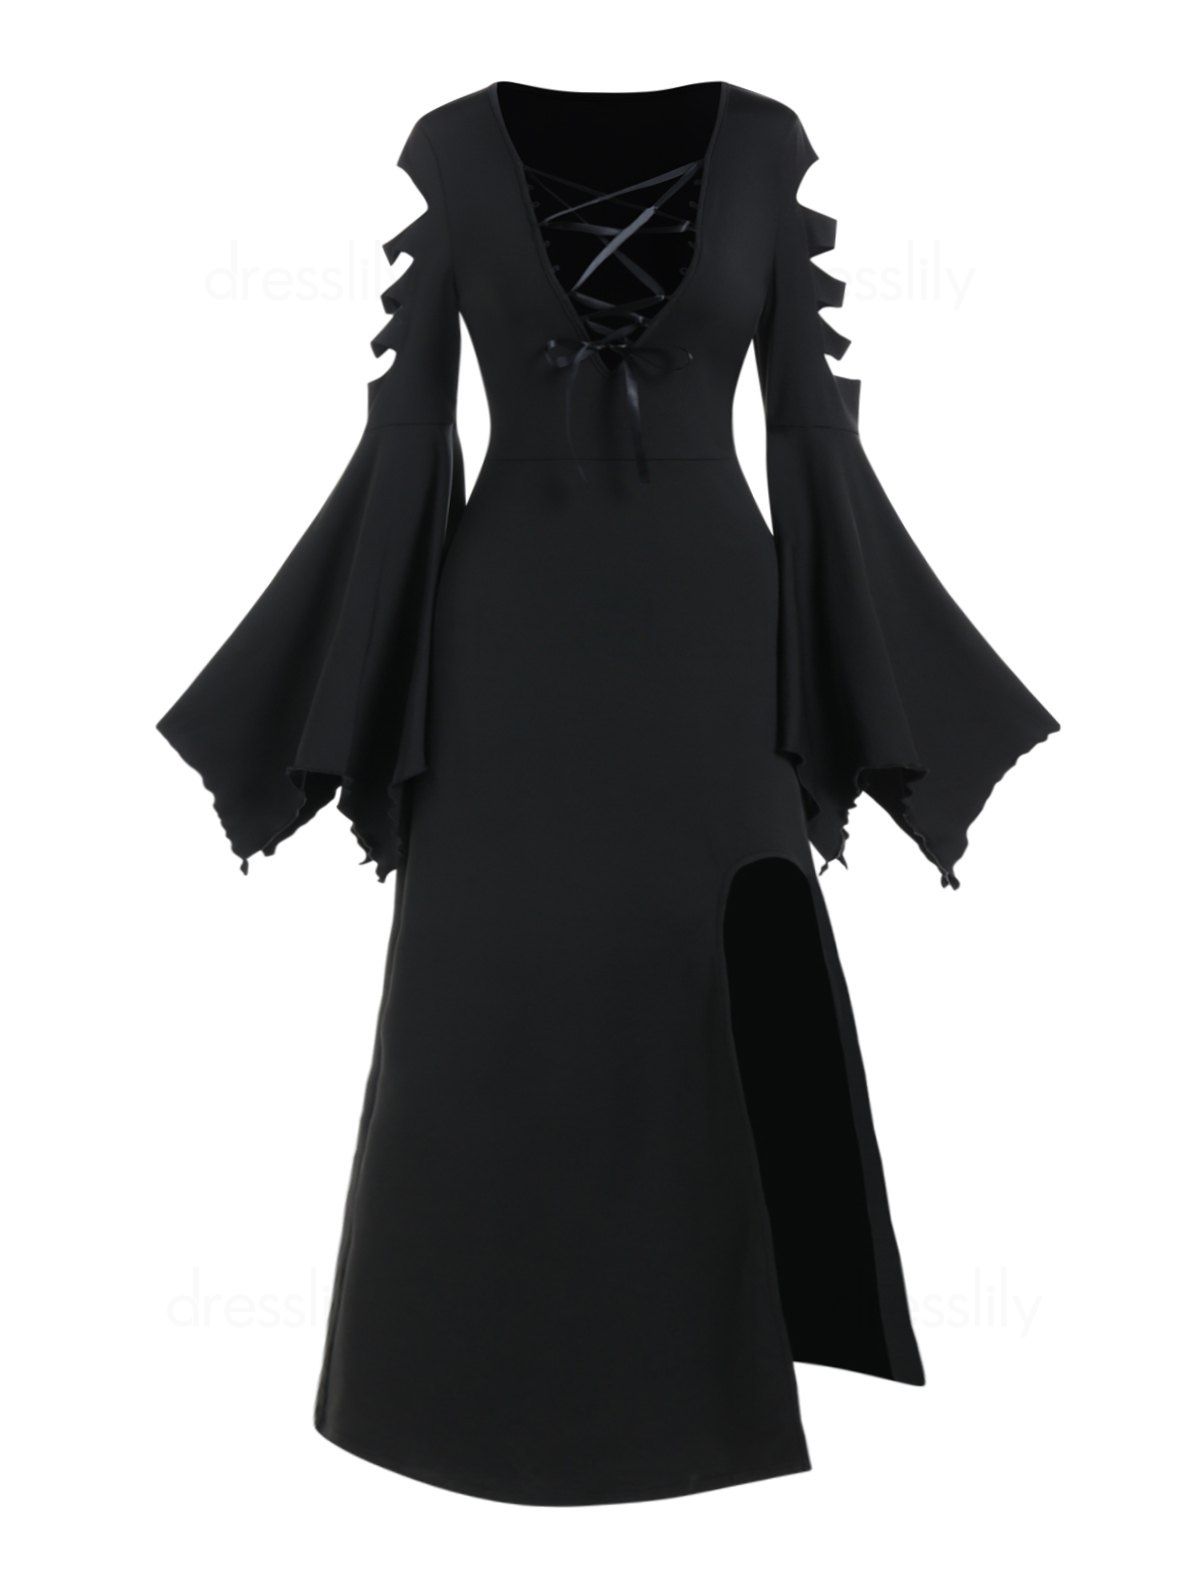 Gothic Dress Lace Up High Slit Maxi Dress Ripped Handkerchief Bell Sleeve Long Dress - BLACK XXXL